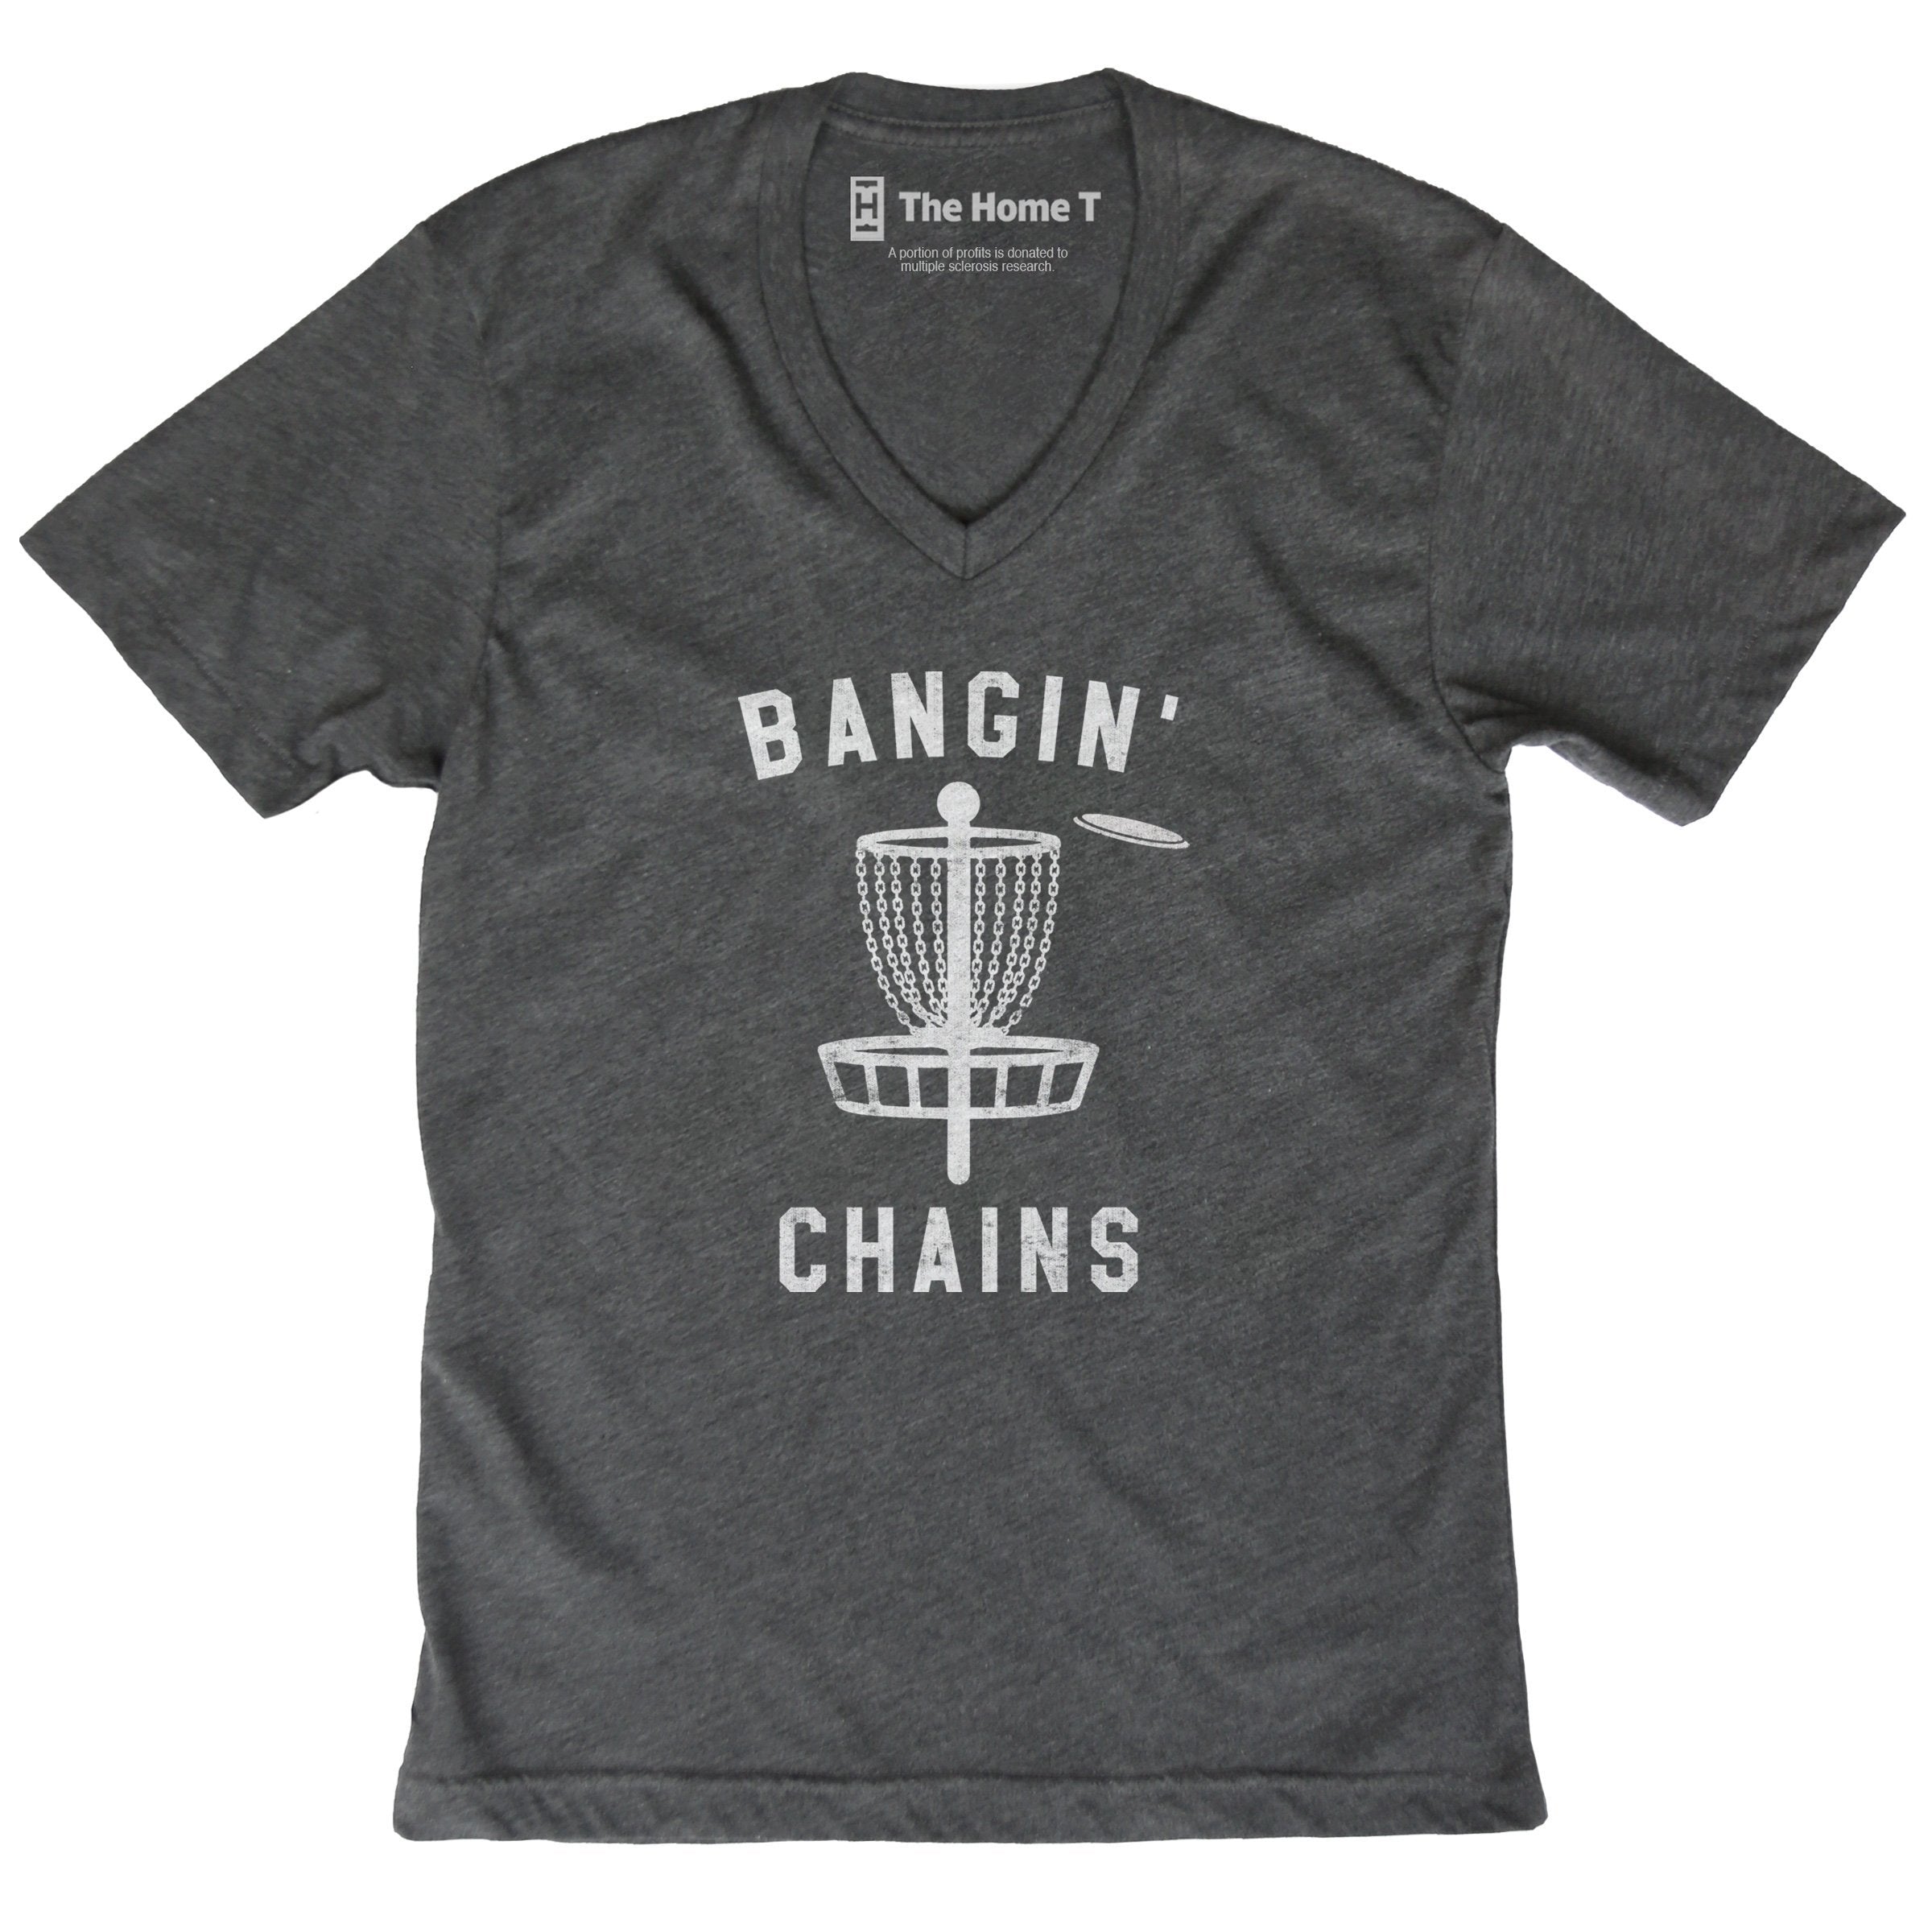 Bangin' Chains